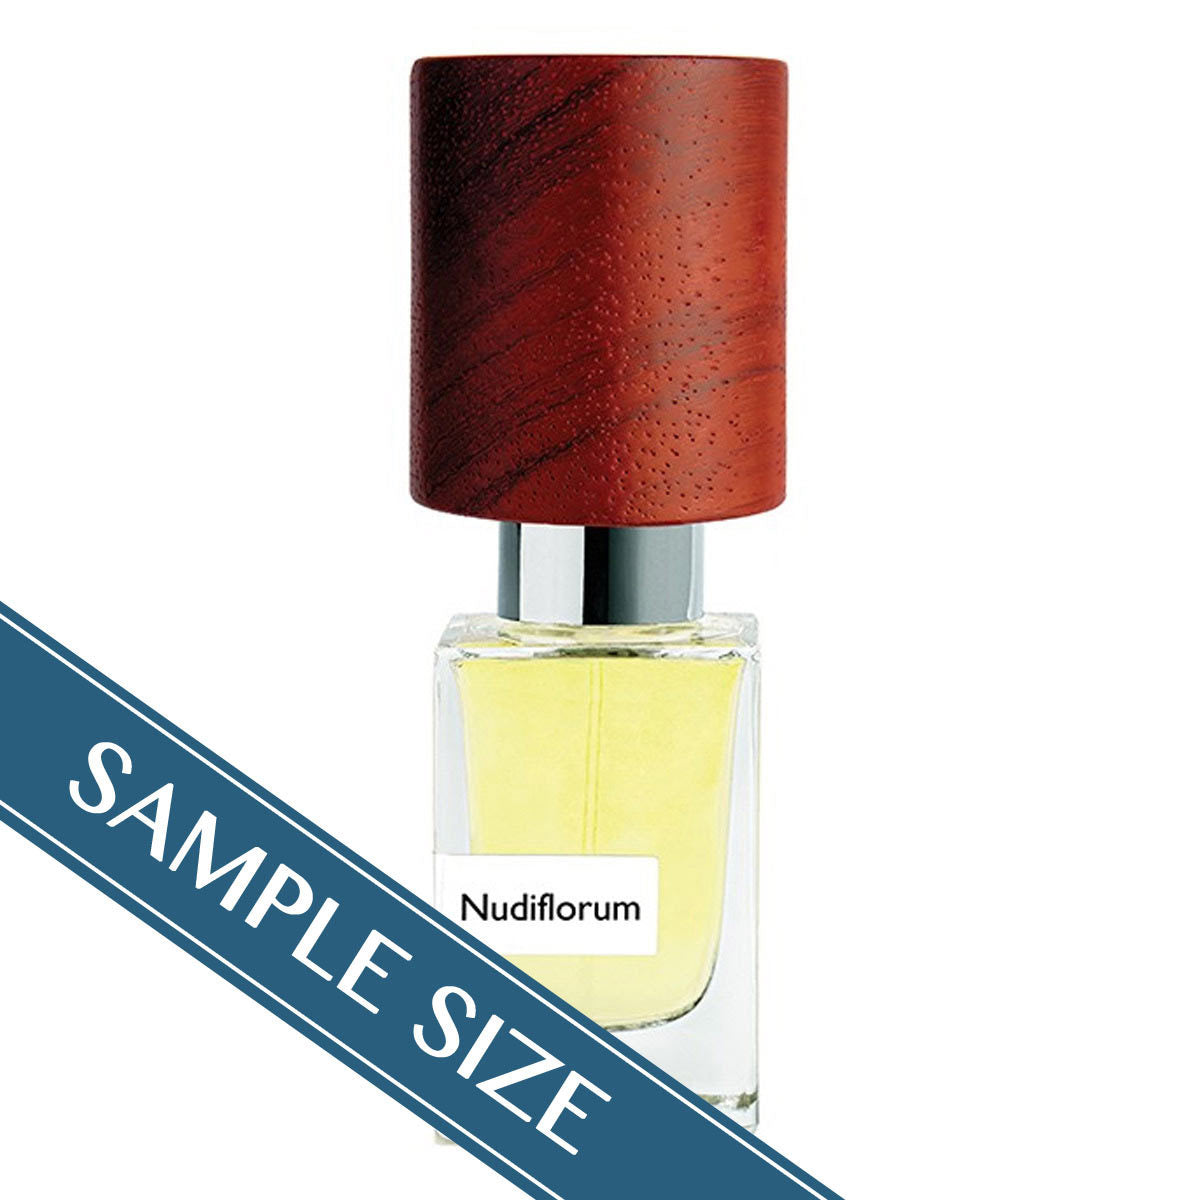 Primary image of Sample - Nudiflorum Extrait de Parfum